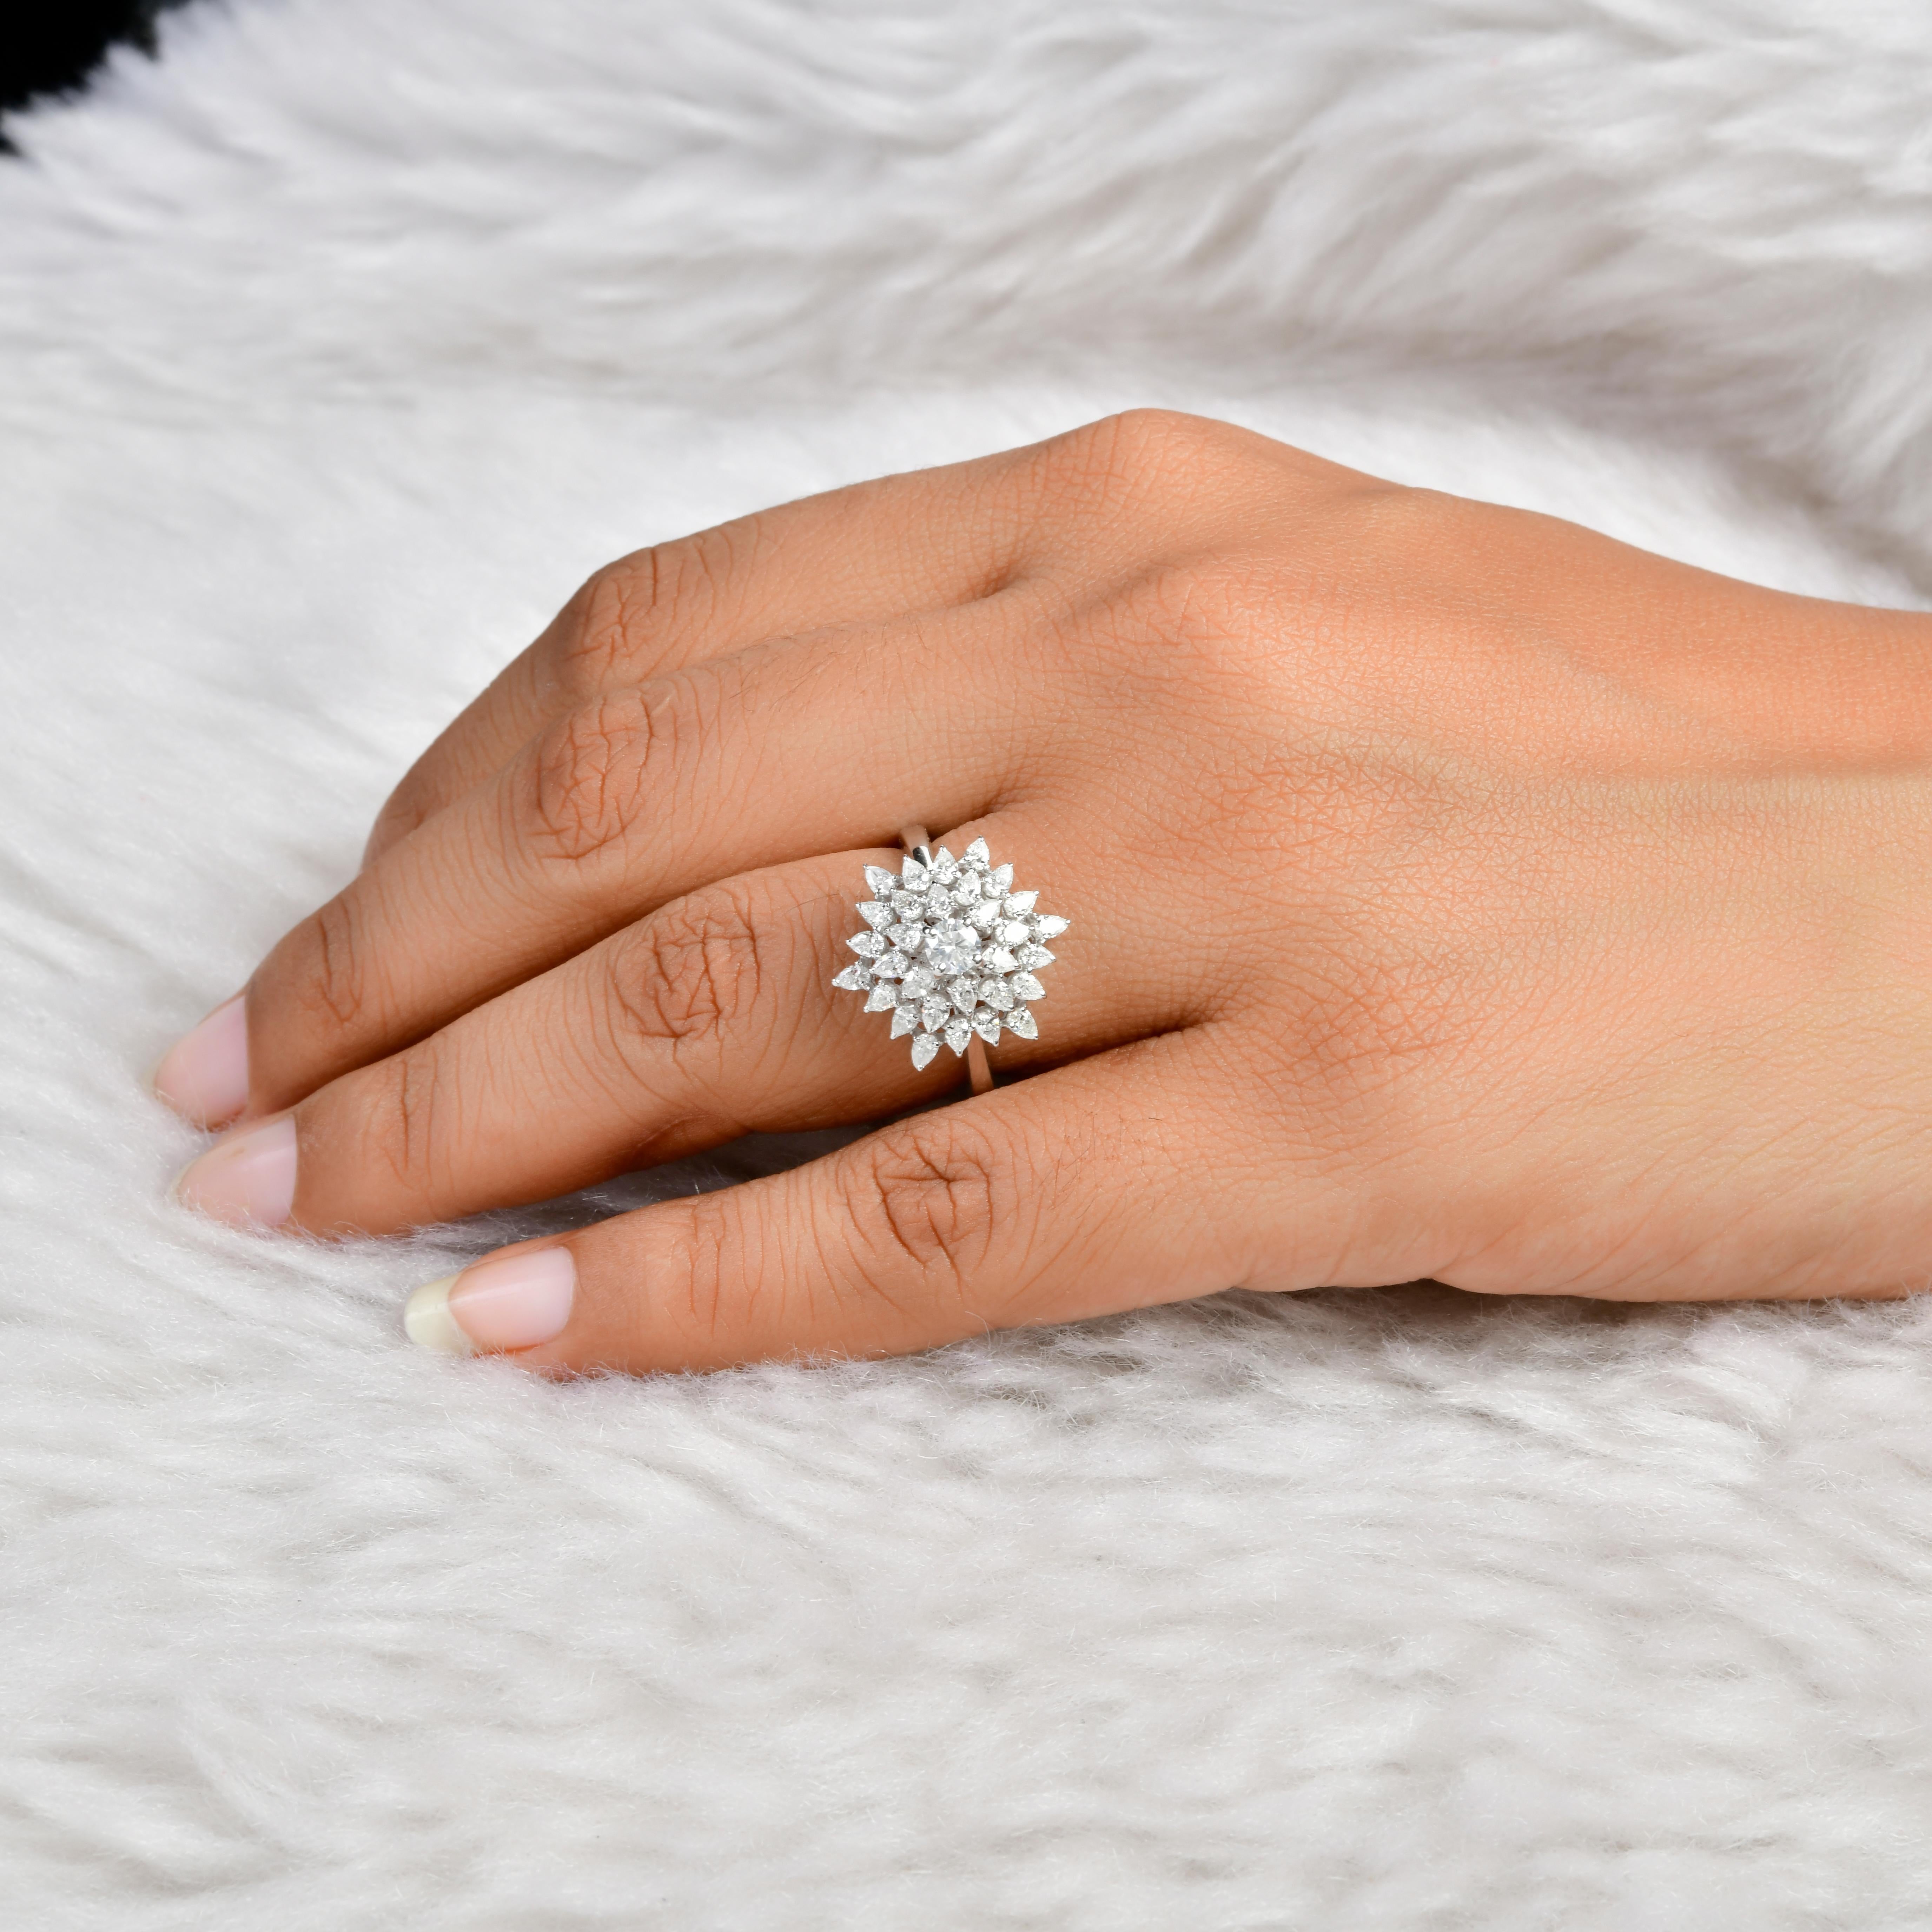 Women's Natural 1.23 Carat Round & Pear Diamond Flower Ring 14 Karat White Gold Jewelry For Sale